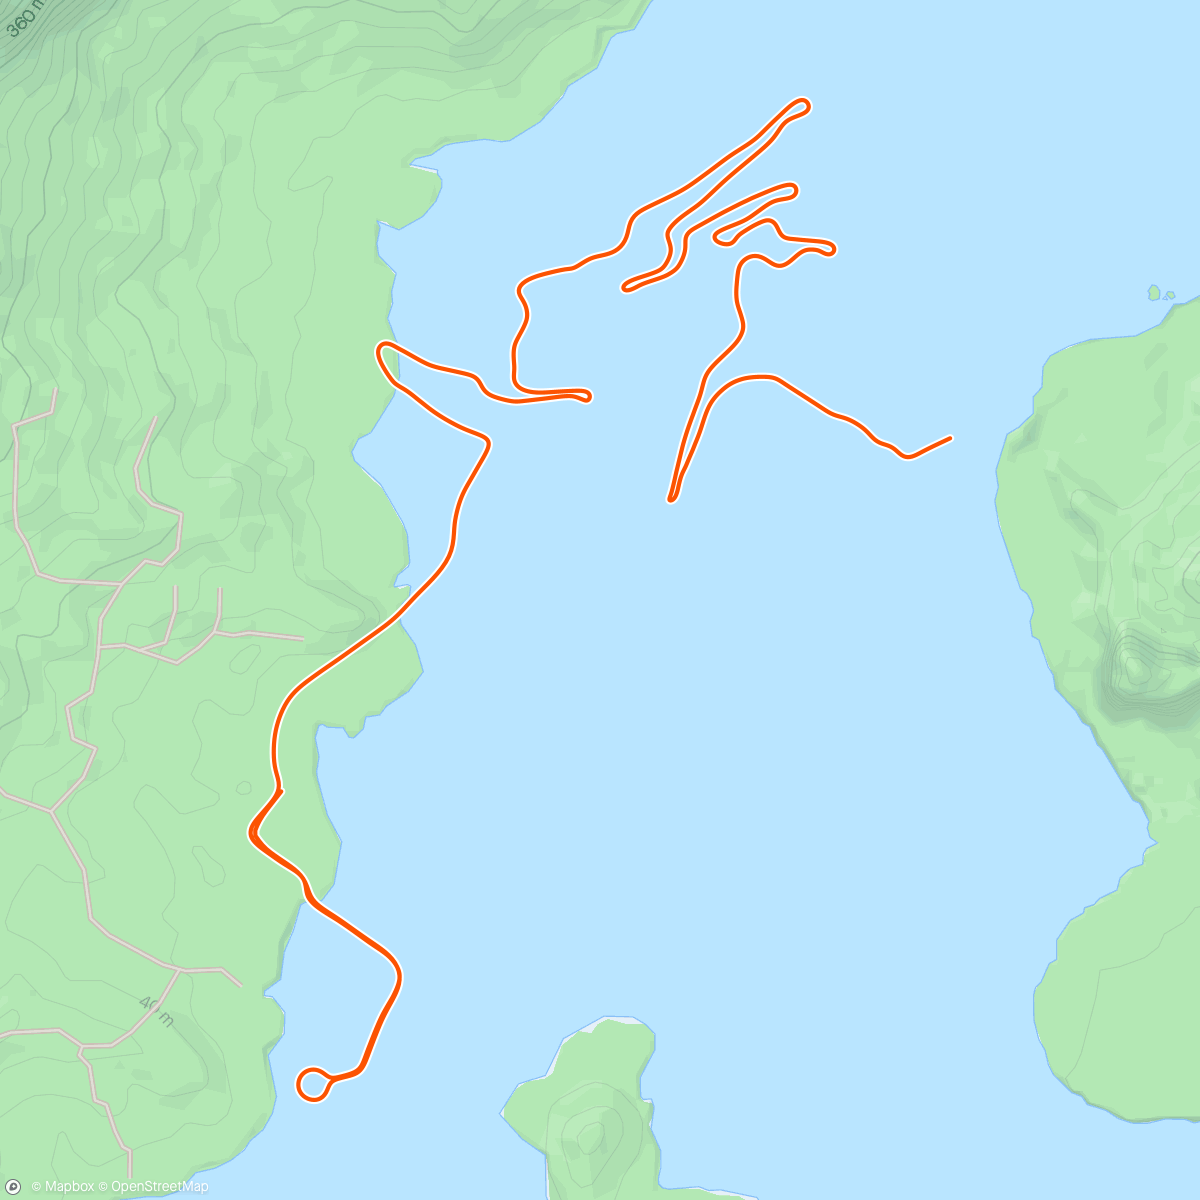 Карта физической активности (Zwift - Climb Portal: Coll d'Ordino at 100% Elevation in Watopia)